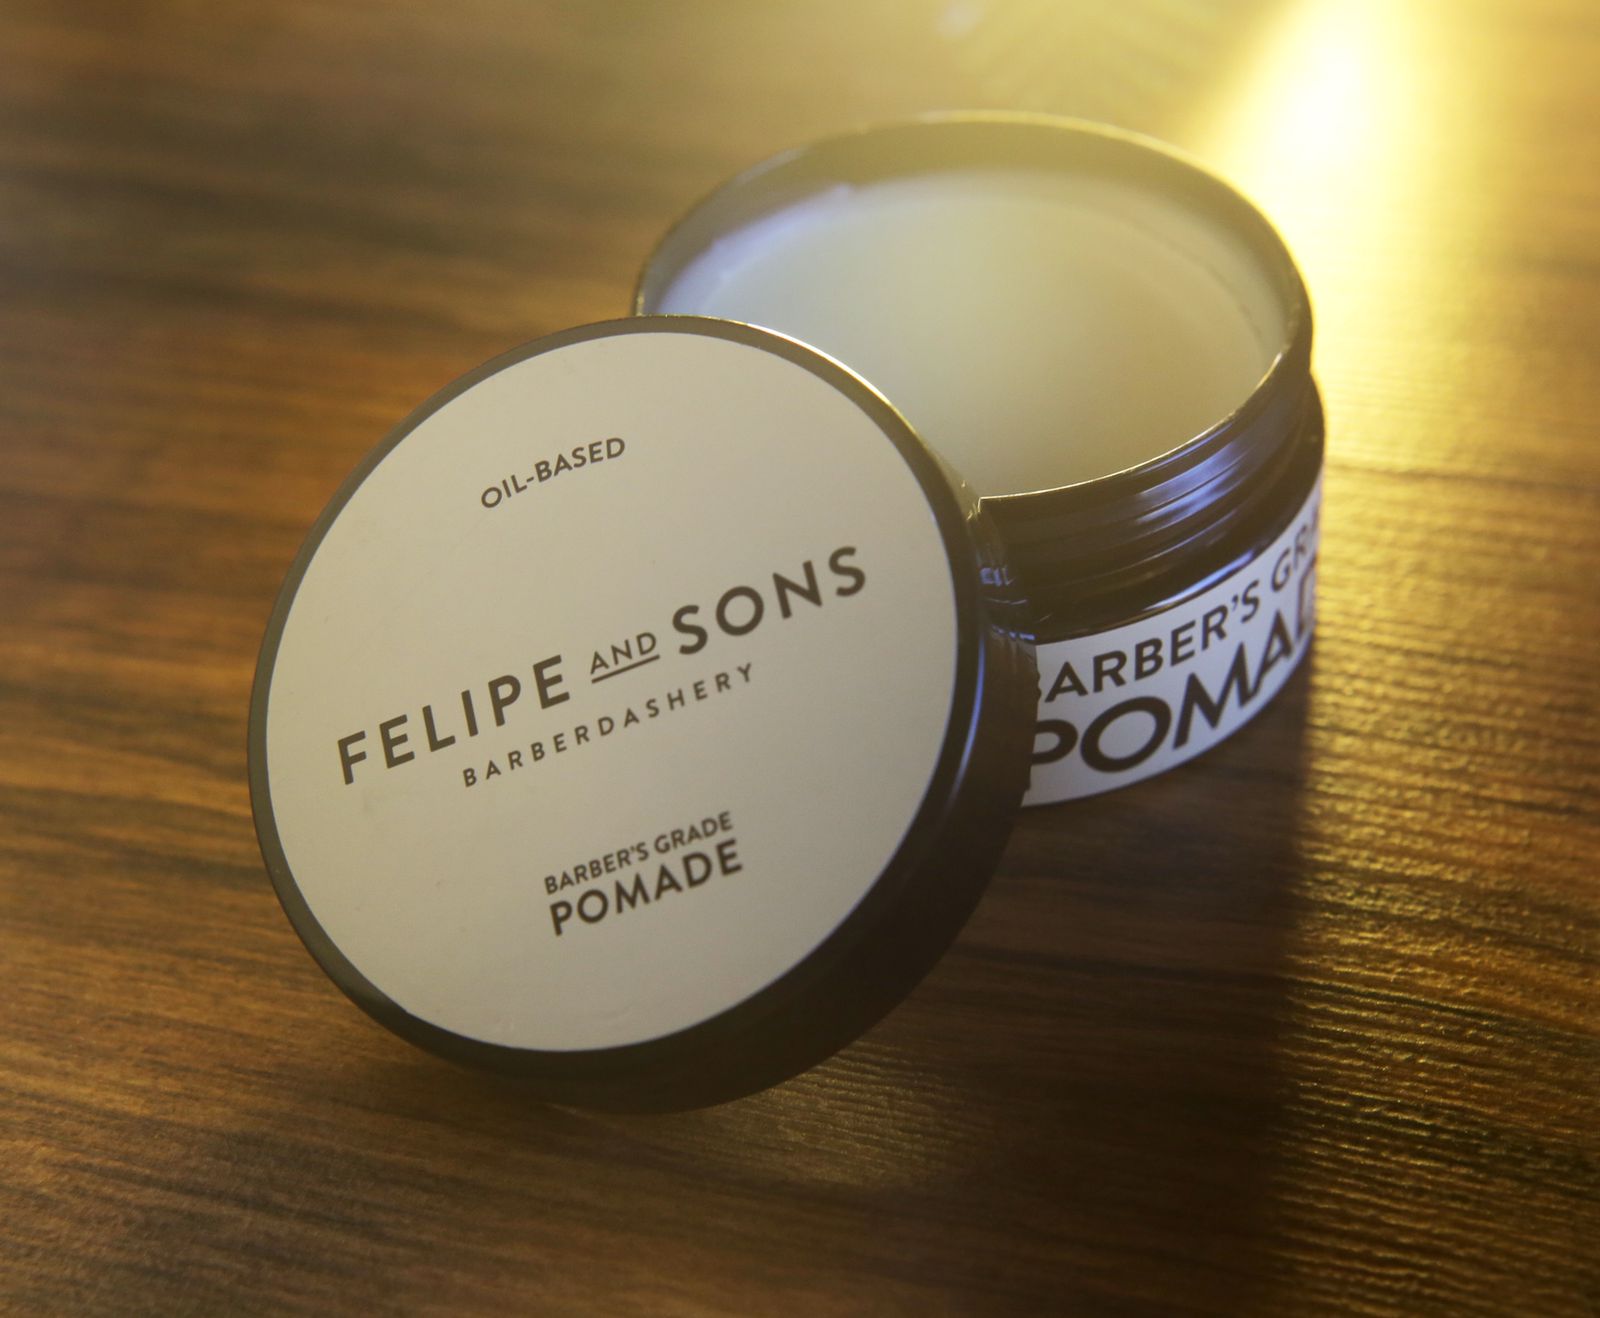 Felipe And Sons ₱4500 PH Gift Card